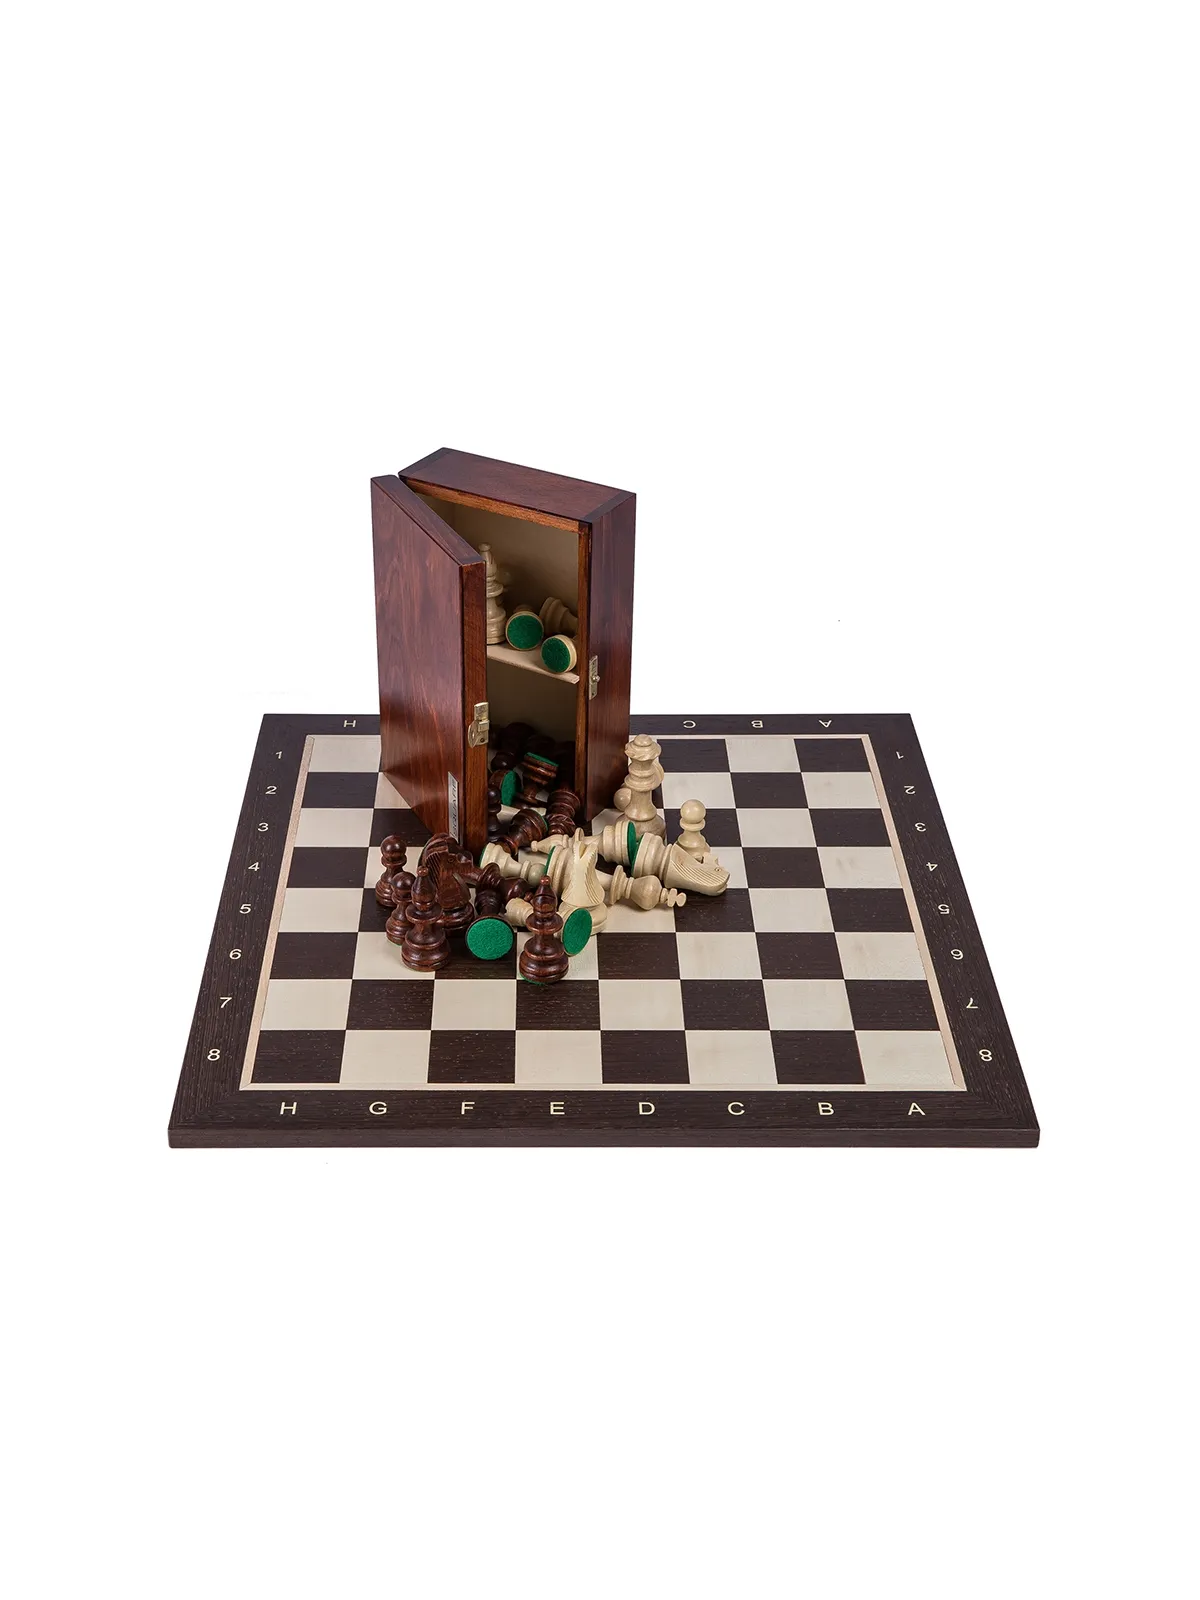 Profi Chess Set No 5 - Wenge